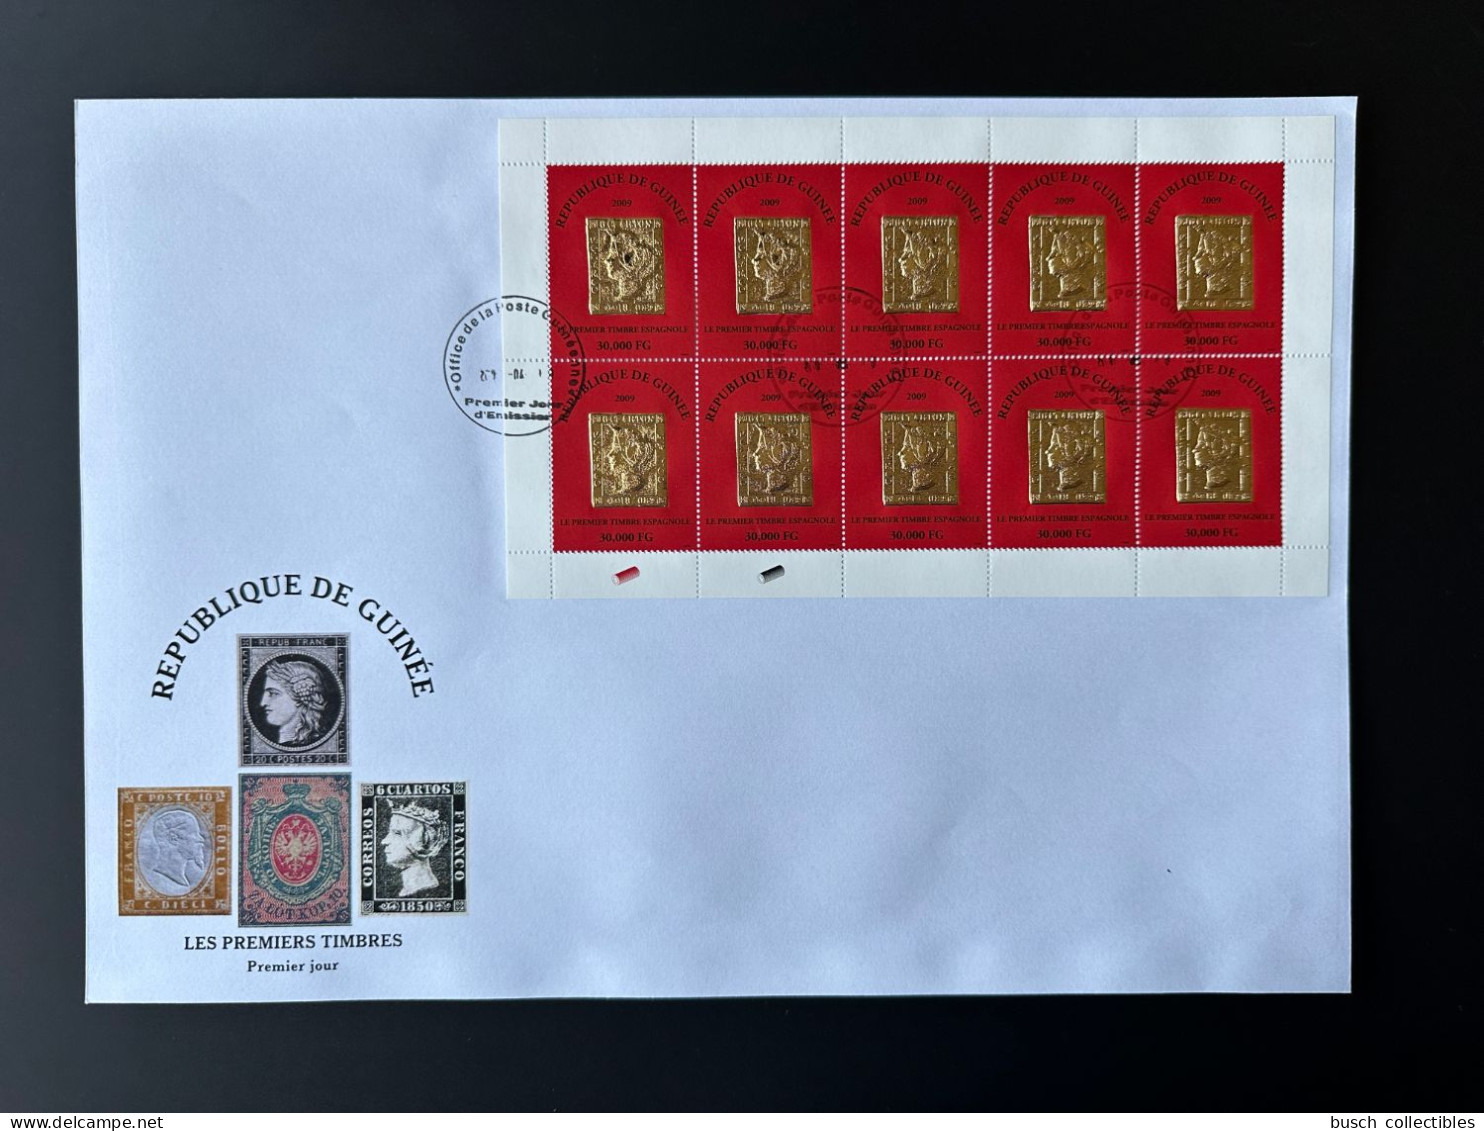 Guinée Guinea 2009 Mi. 6718 FDC Kleinbogen Feuillet Premier Timbre Espagnol First Spanish Stamp On Stamp Gold Or - Postfris – Scharnier